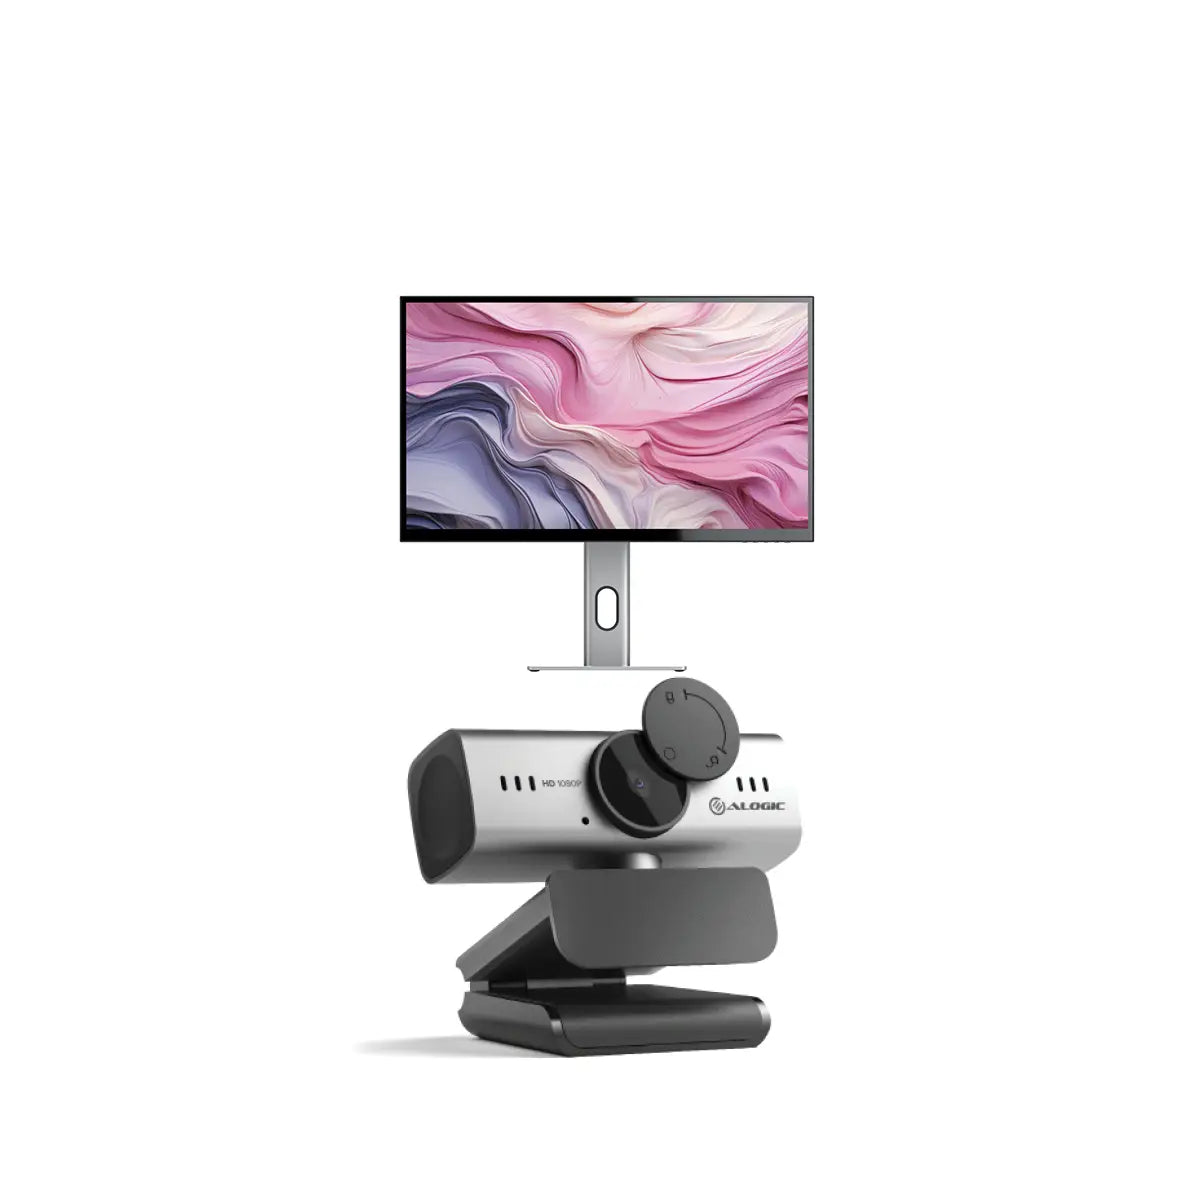 clarity-27-uhd-4k-monitor-iris-webcam-a09_1